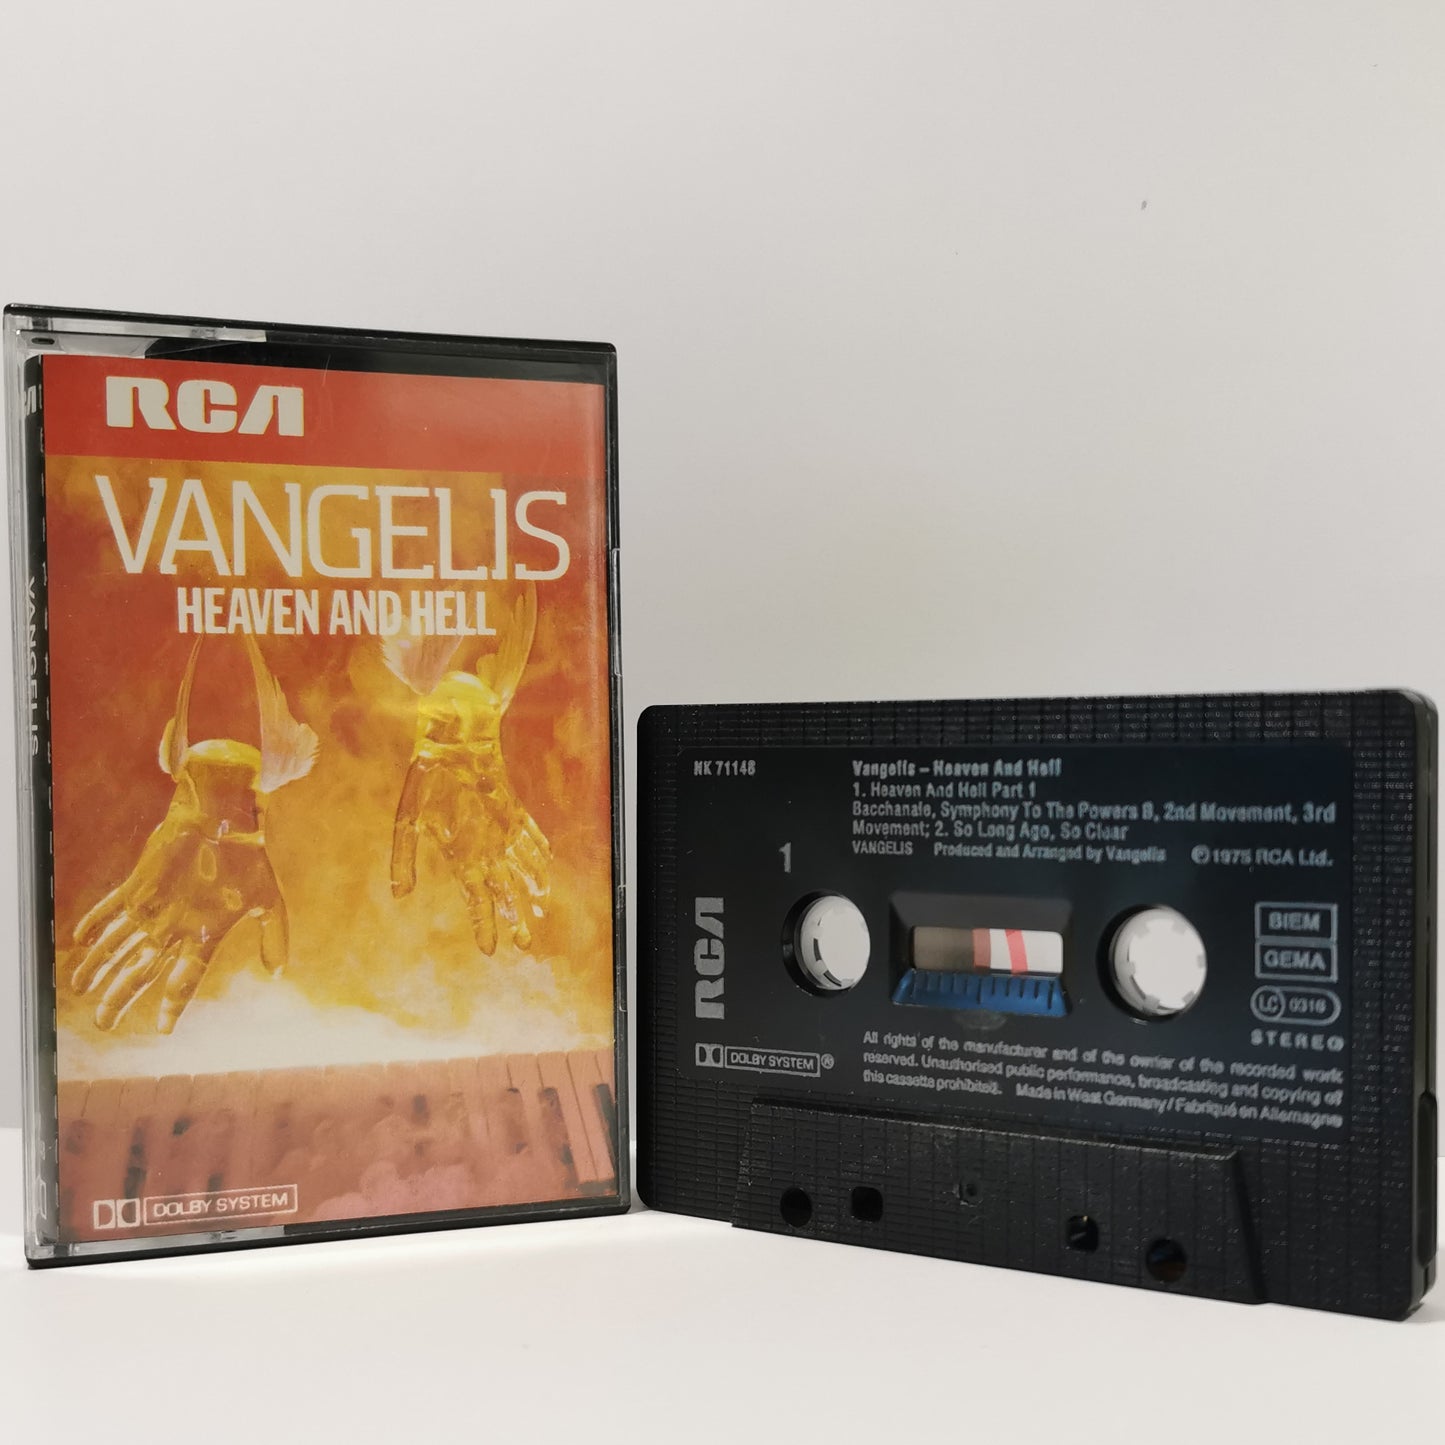 VANGELIS - Heaven And Hell